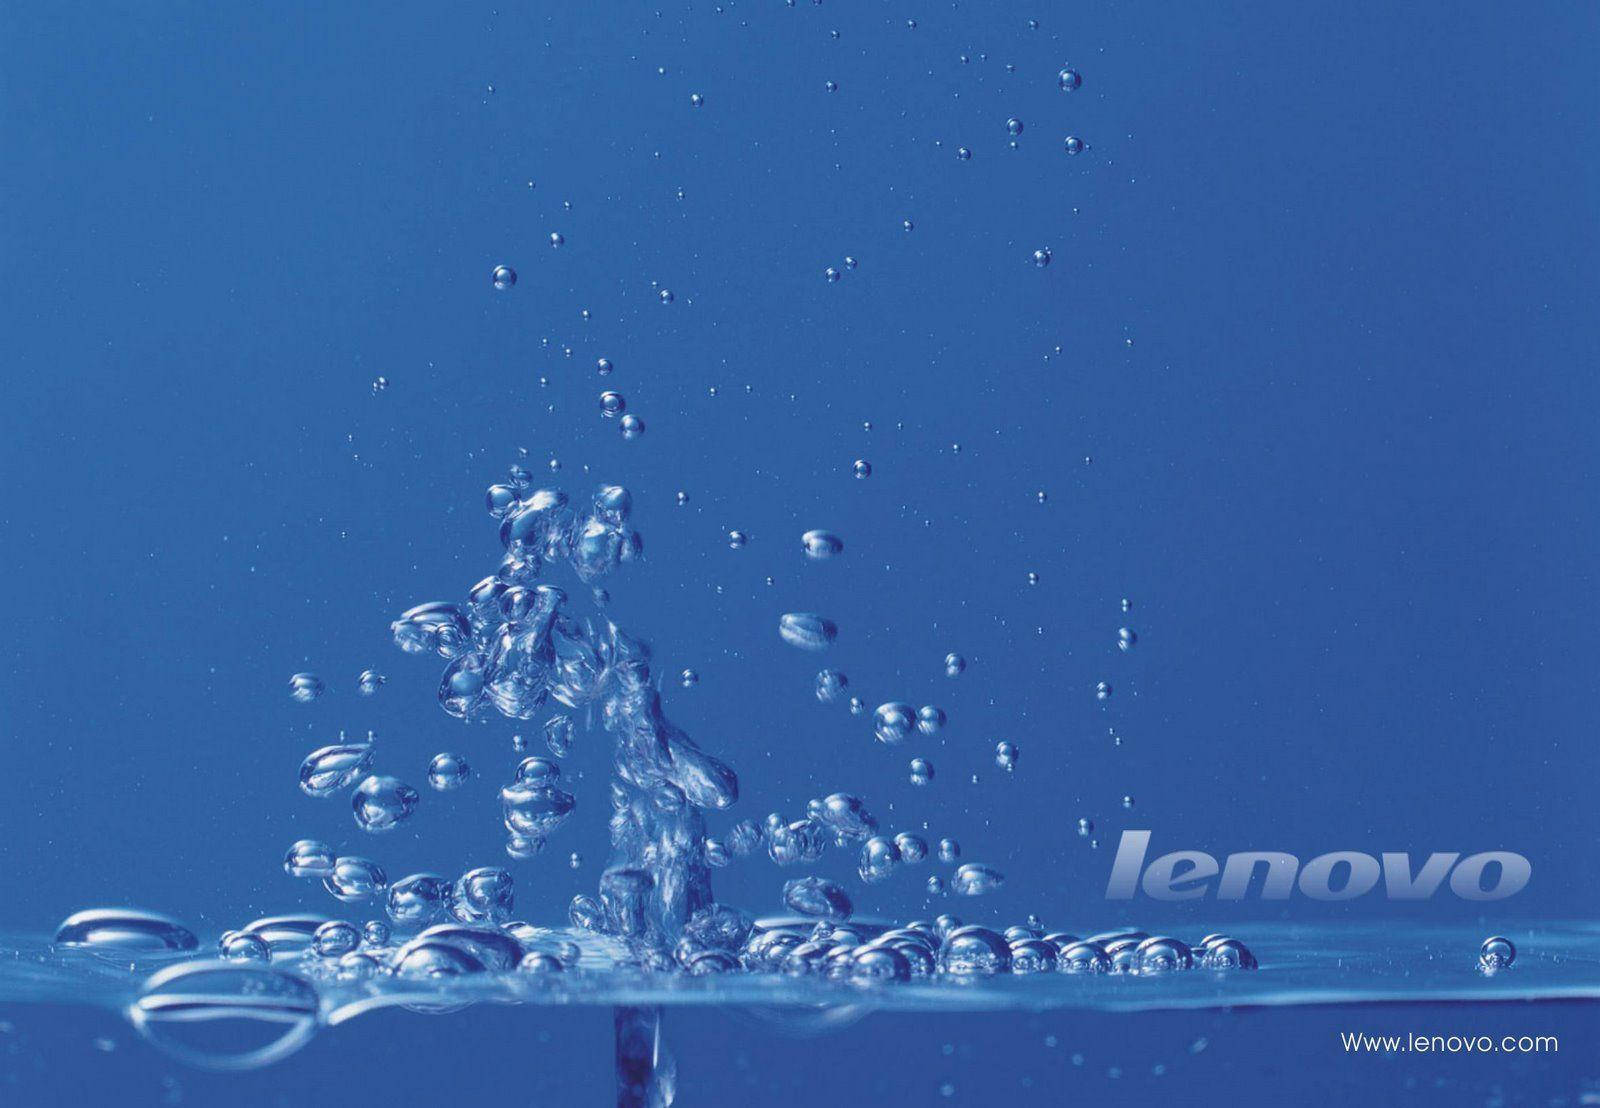 Water Drops Lenovo Hd Wallpaper